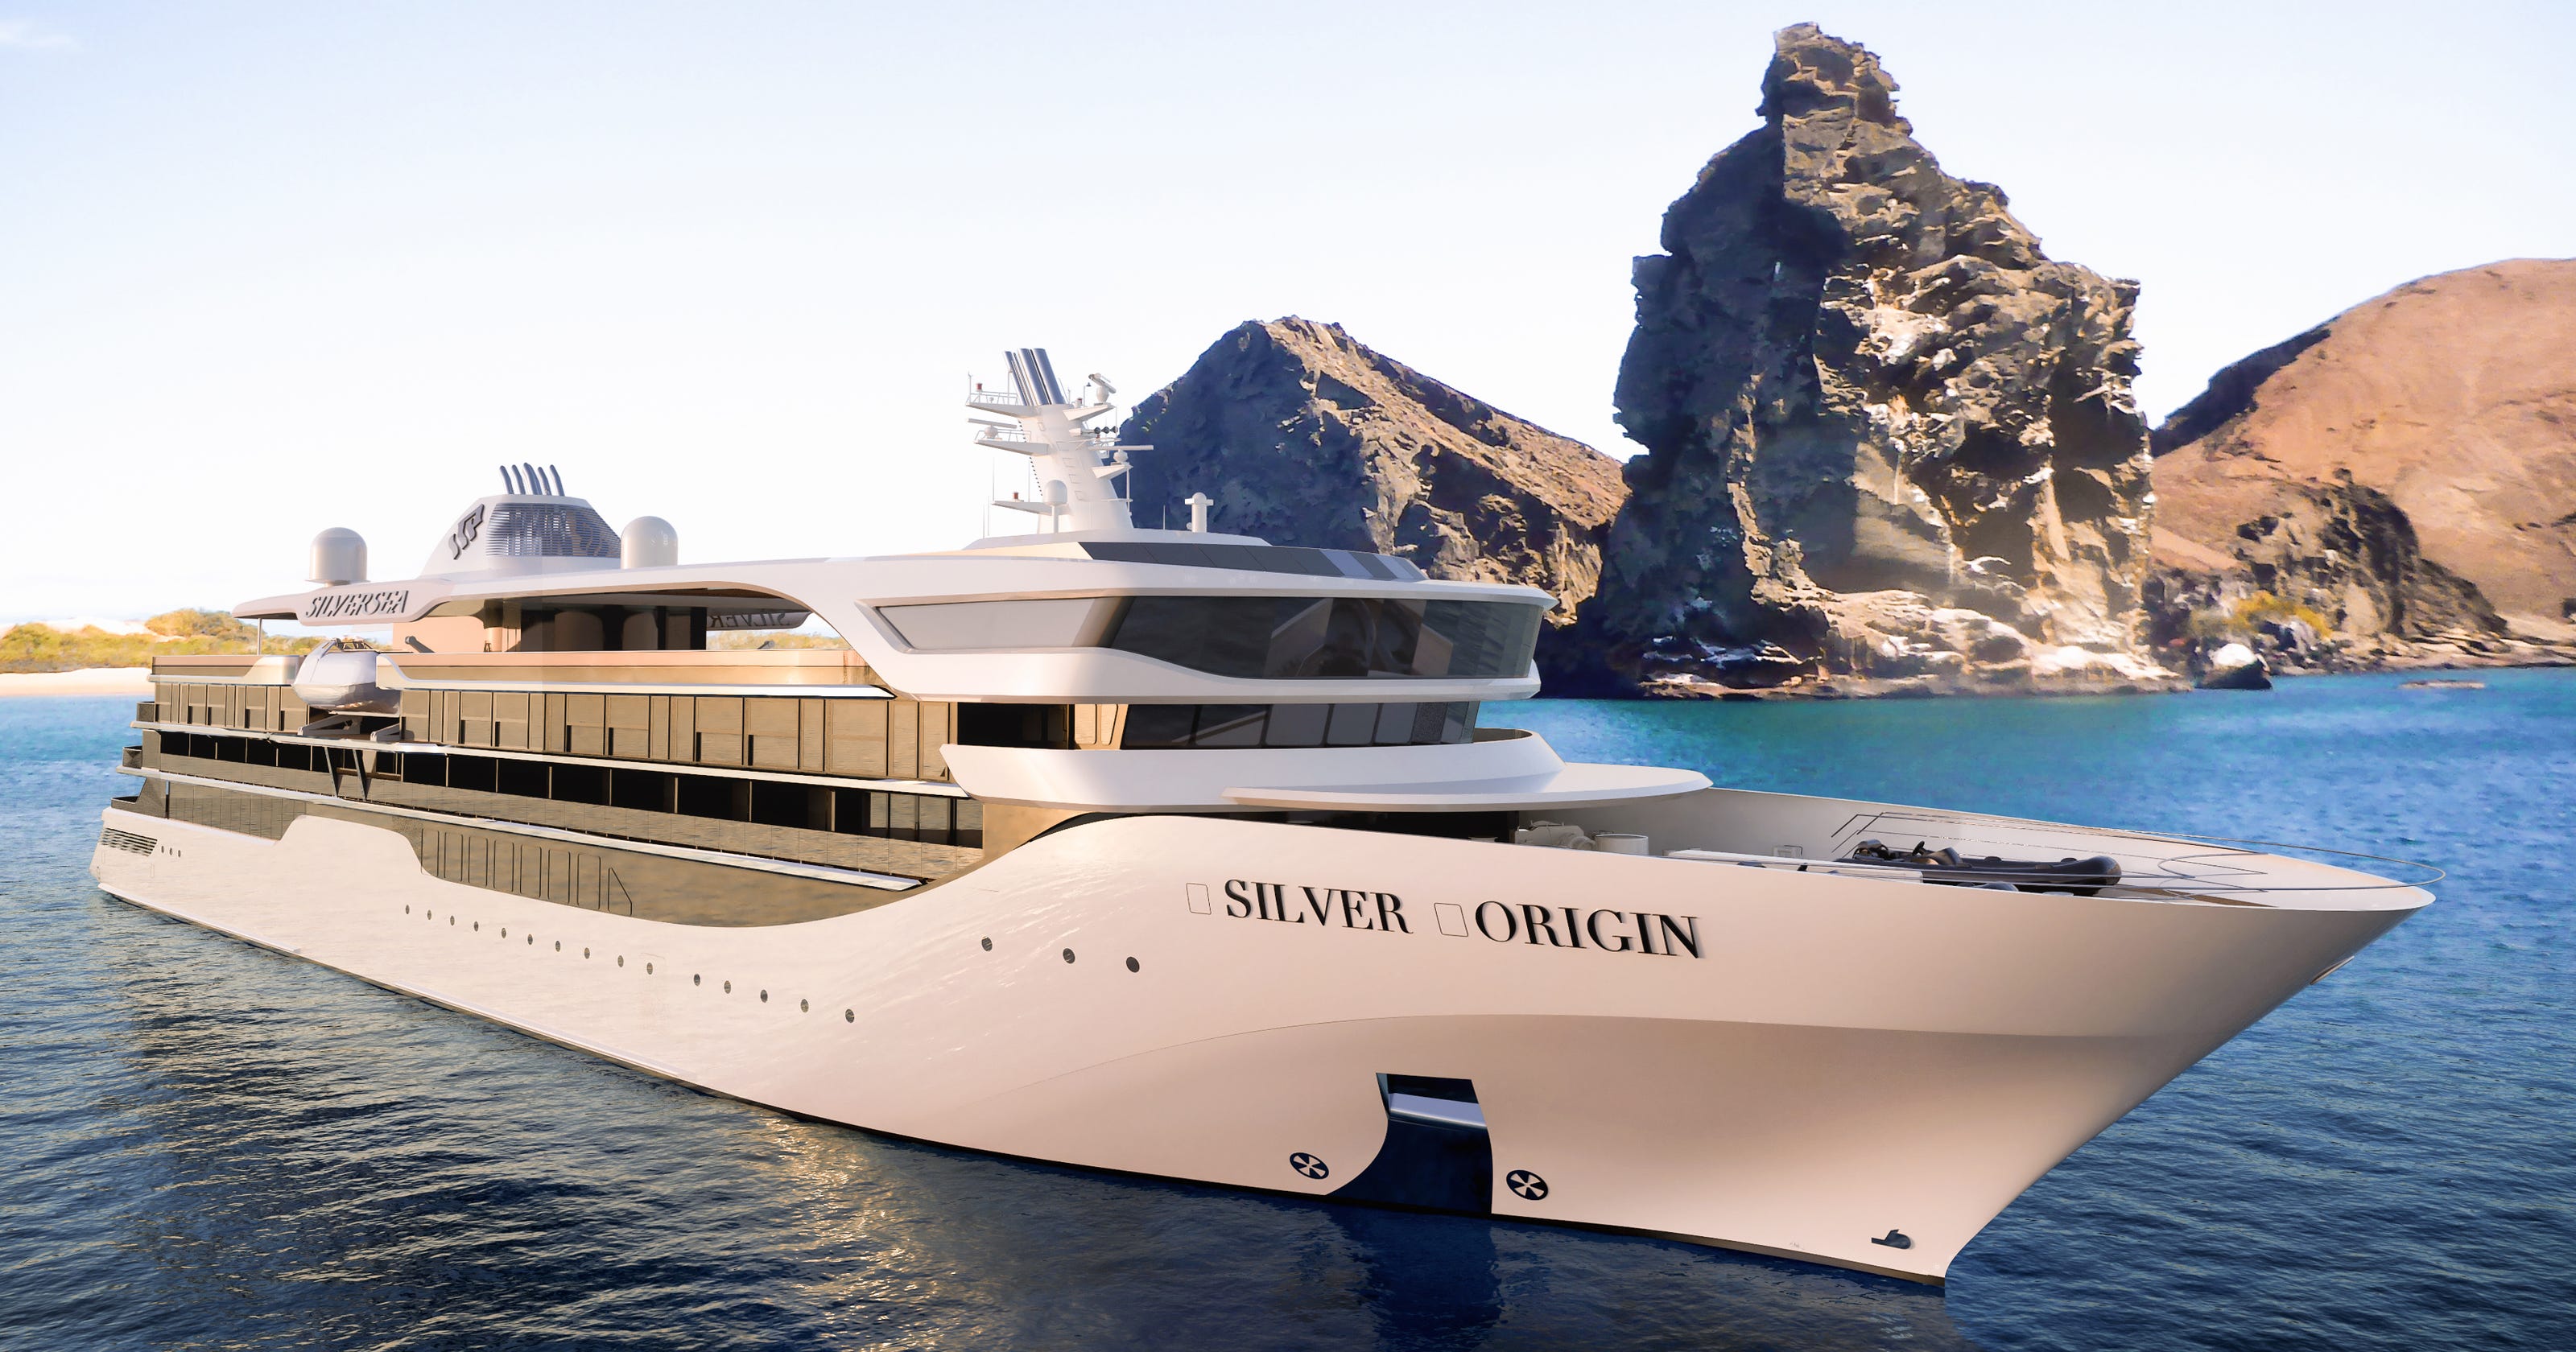 Silversea's Silver Origin cruise ship will sail the Galapagos Islands